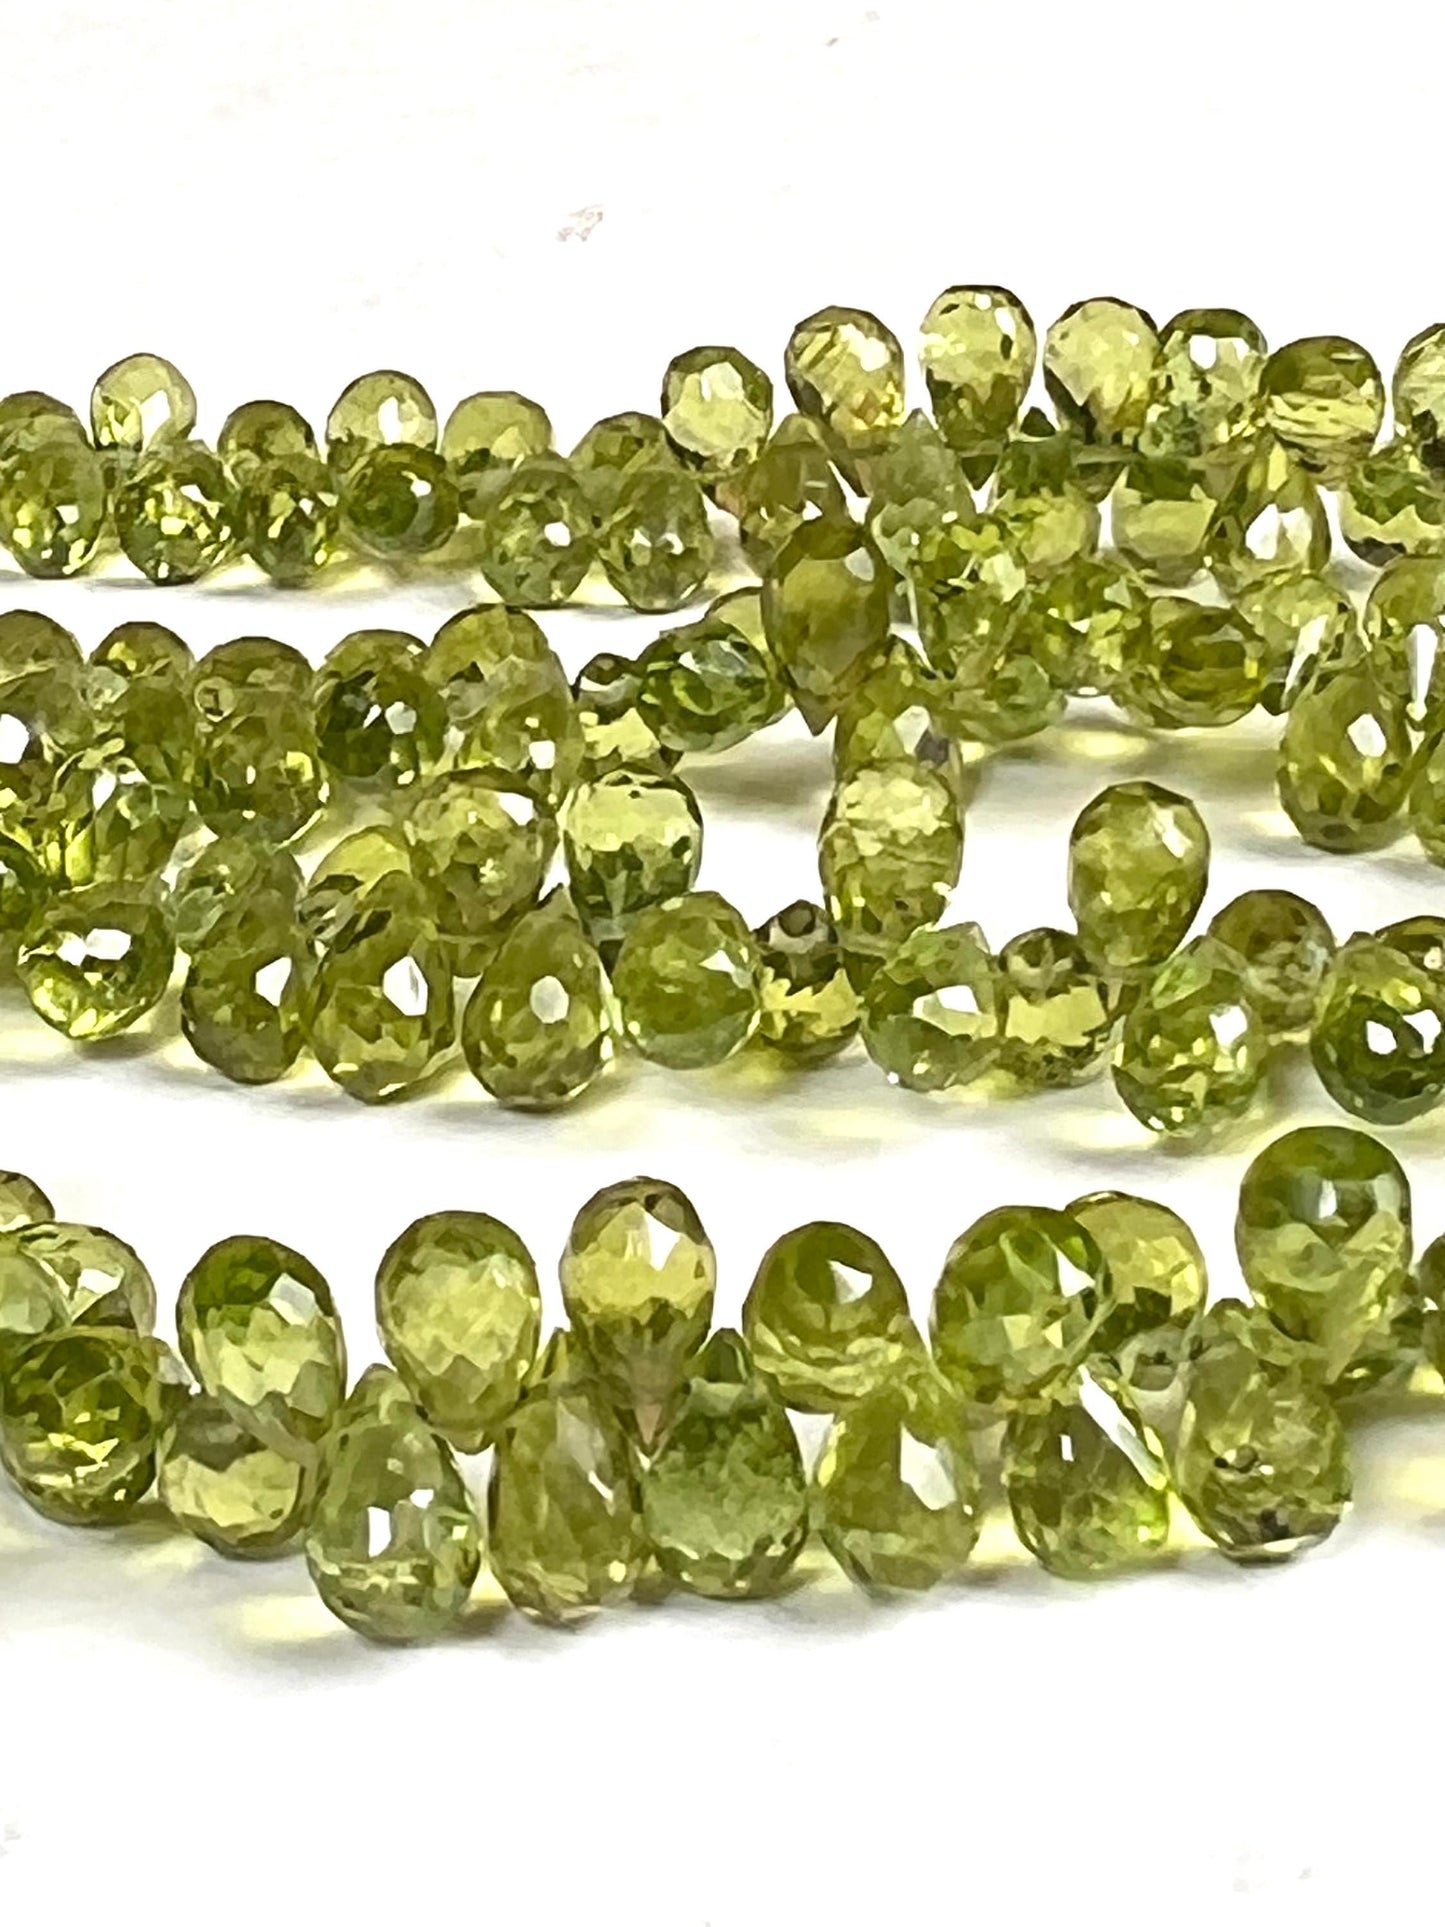 Peridot Briolette drop AAA quality Faceted Teardrop 4-5x6.5-8mm Gemstone Jewelry Making Beads 10 pcs, 20 pcs